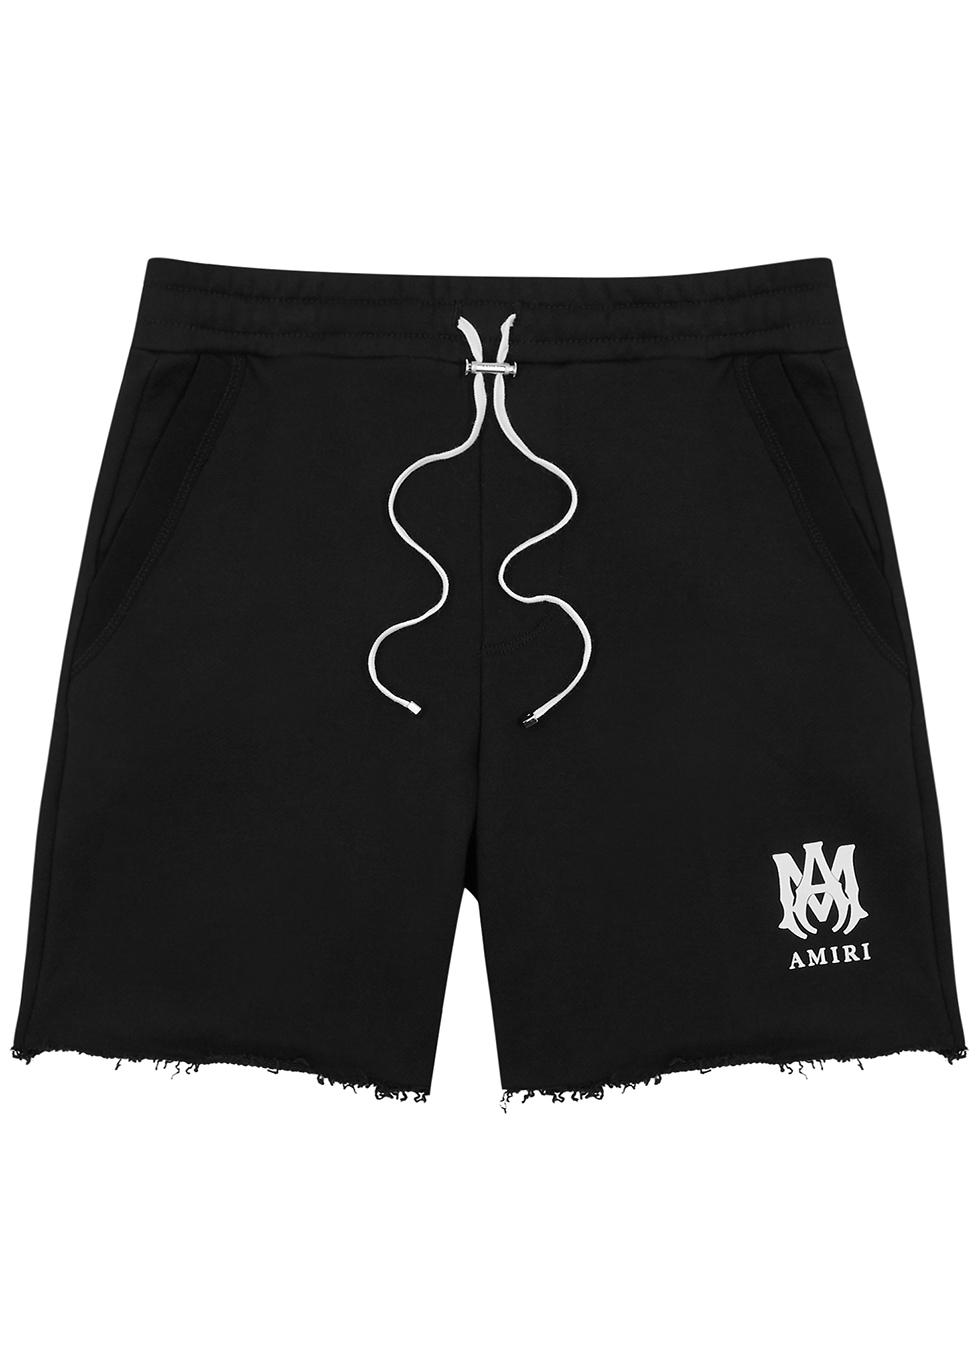 Amiri Core Black Logo Cotton Shorts for Men | Lyst UK